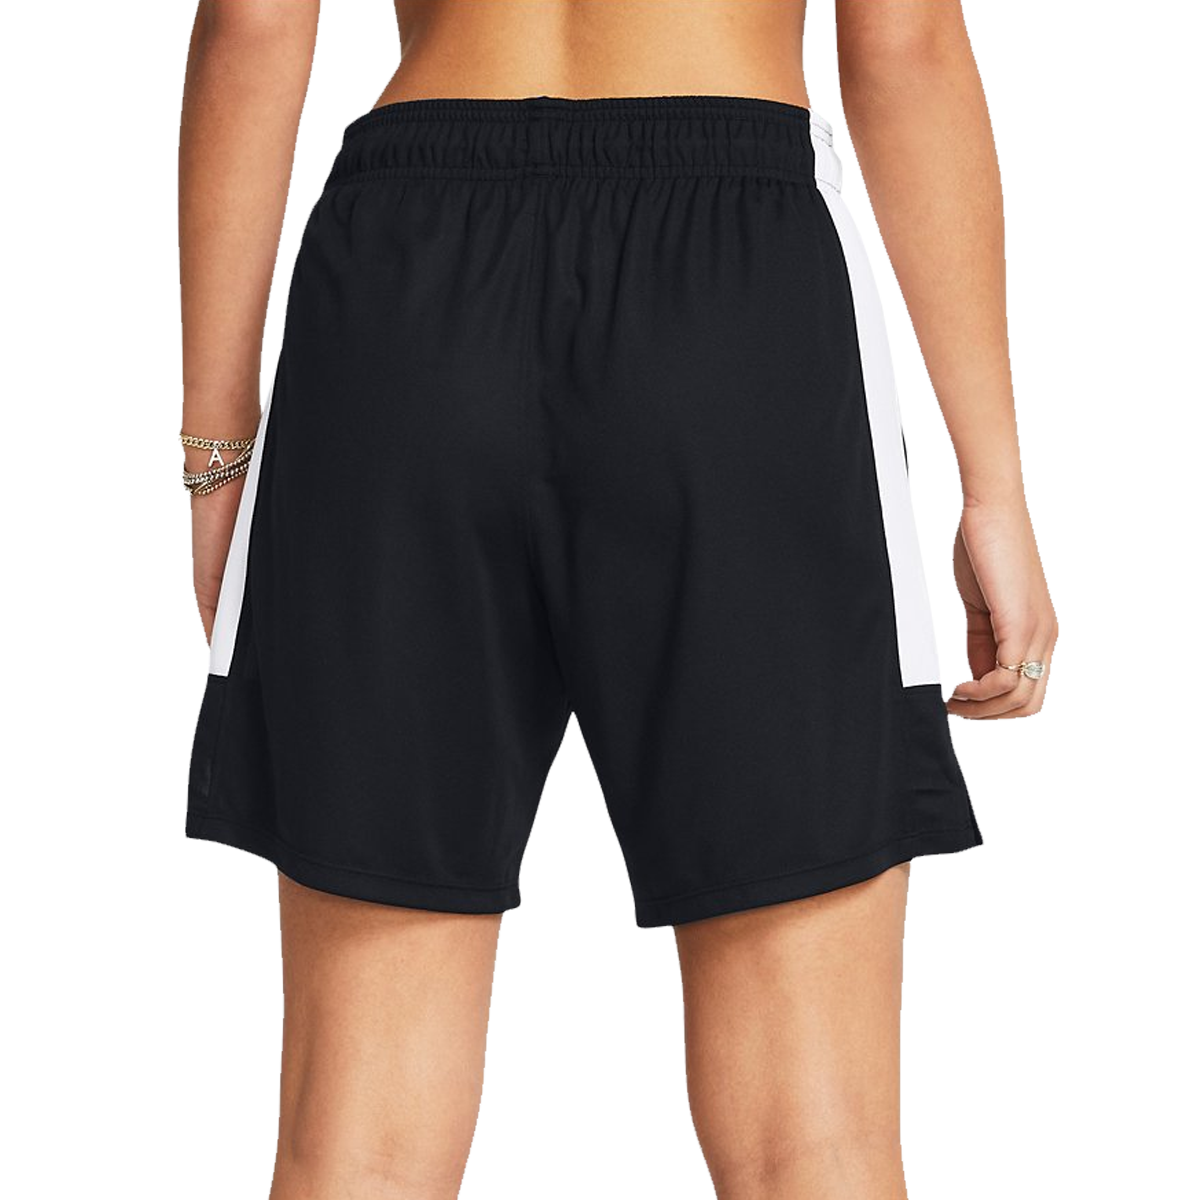 Women's Baseline Shorts alternate view